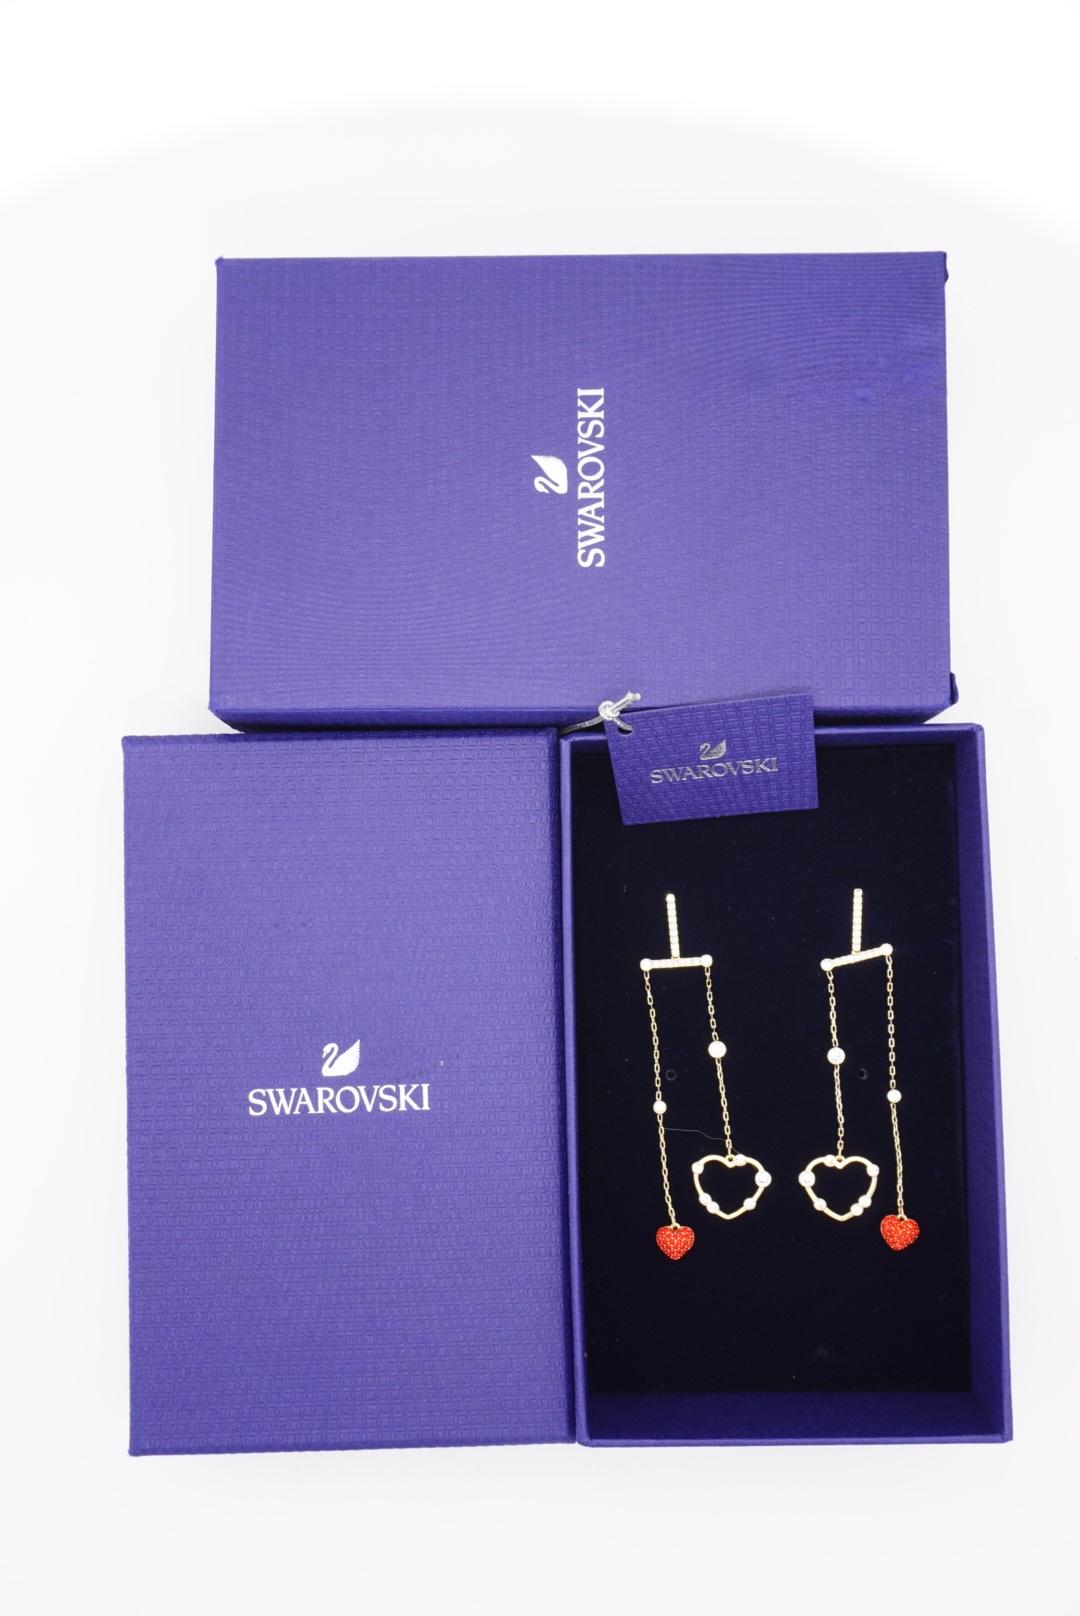 Swarovski OXO Red Heart Hove Chandelier Mobile Pierced Gold Drop Earrings, BNWT For Sale 2